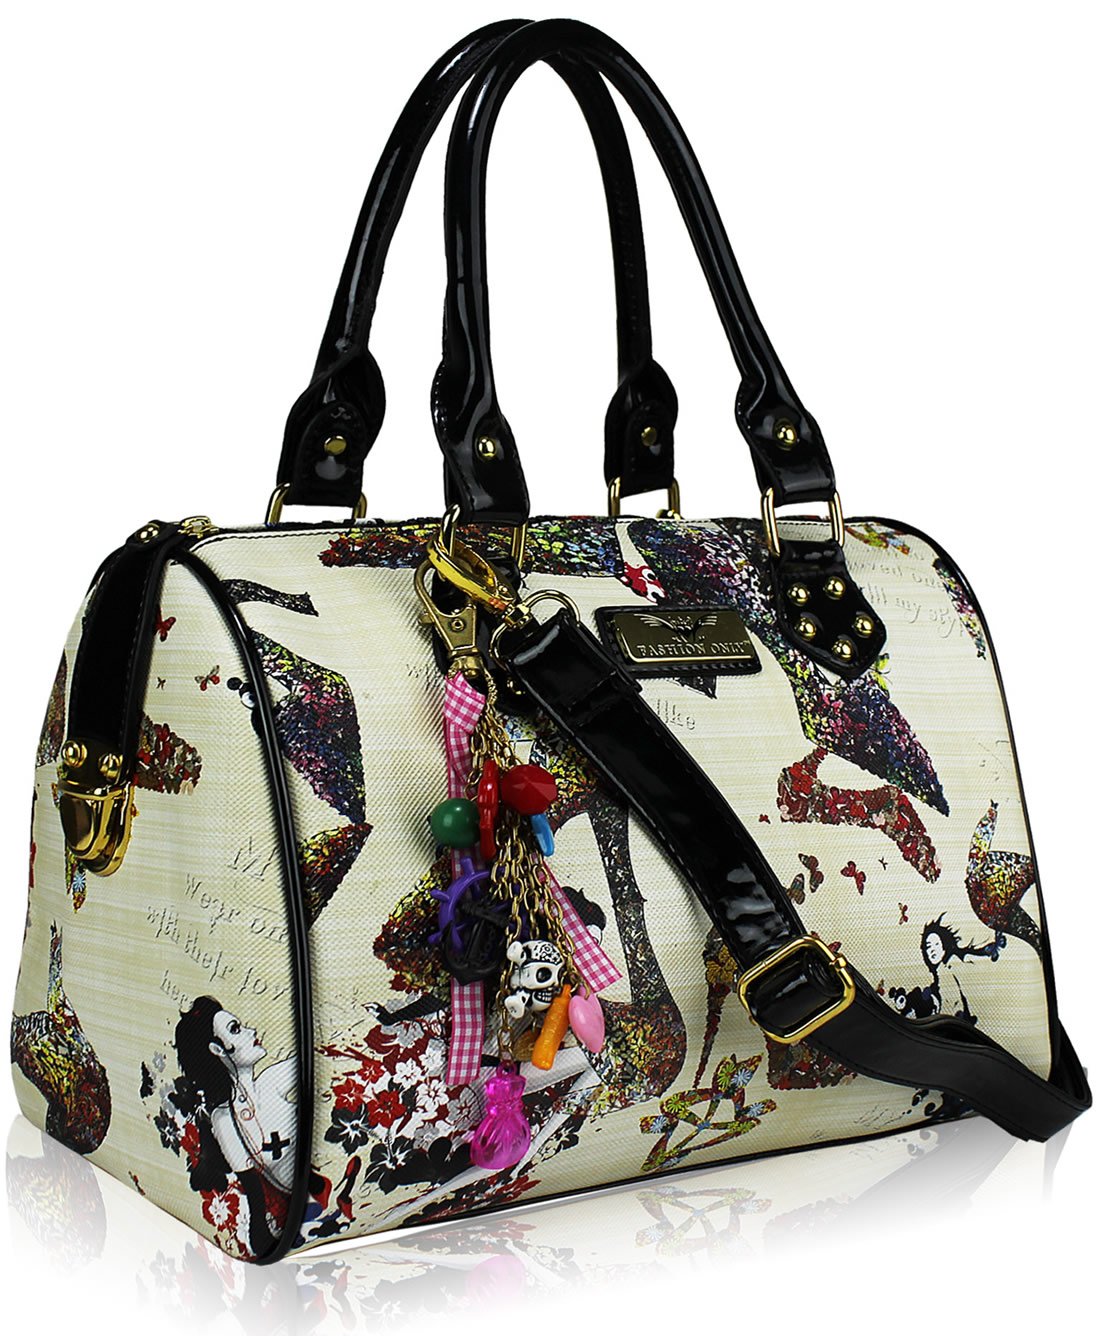 Wholesale bag - Beige Fashion Tote Bag With Charm